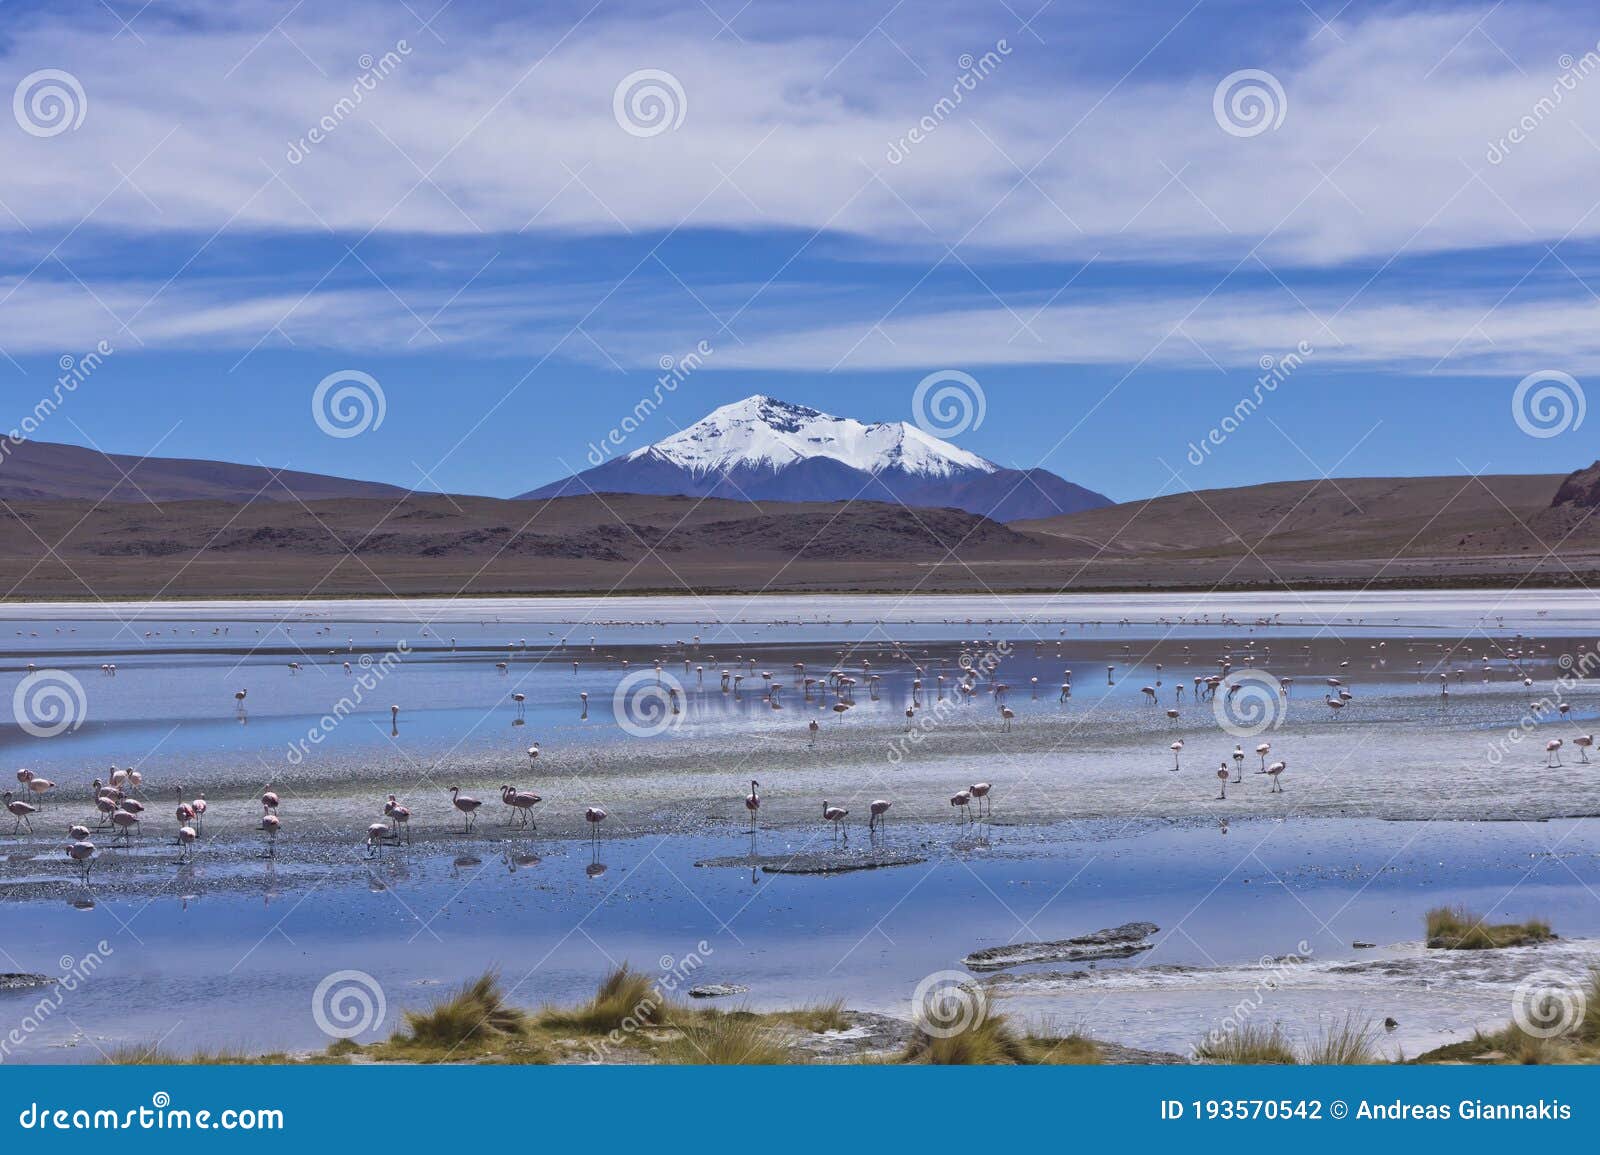 laguna pasto grande, bolivia, south america